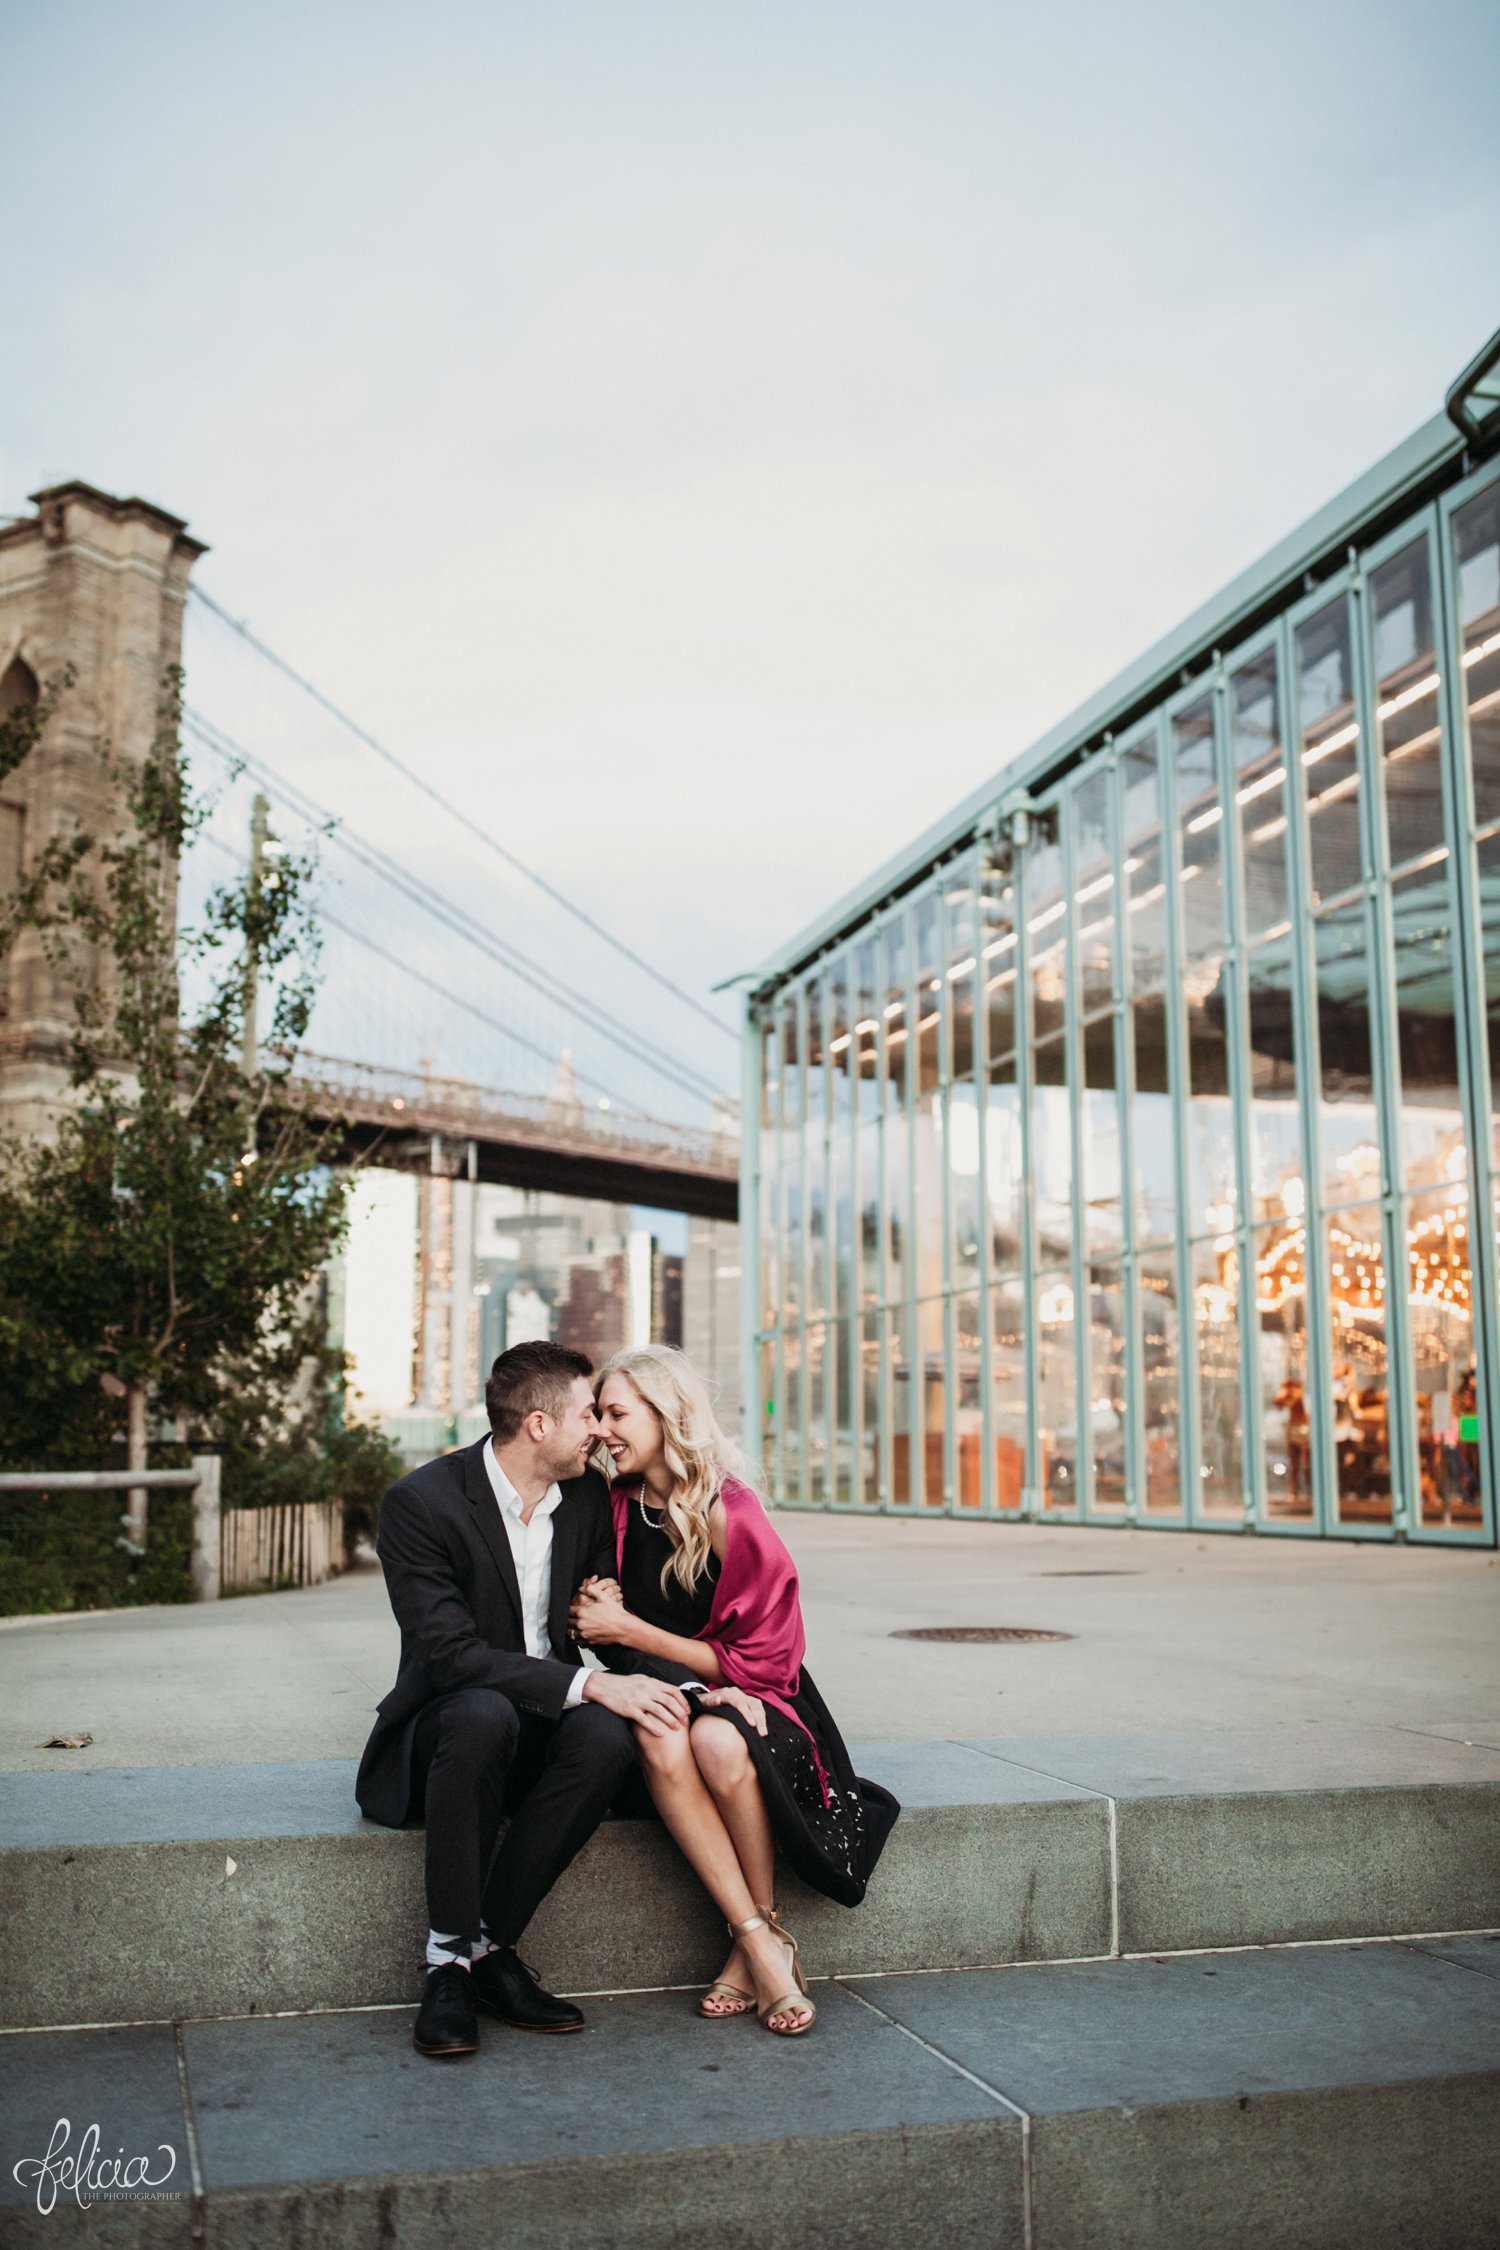 images by feliciathephotographer.com | destination wedding photographer | engagement | new york city | brooklyn bridge | skyline | formal | classic | true love | romantic | symmetry | carnival | merry go round | circus | cuddles | pink shawl | 